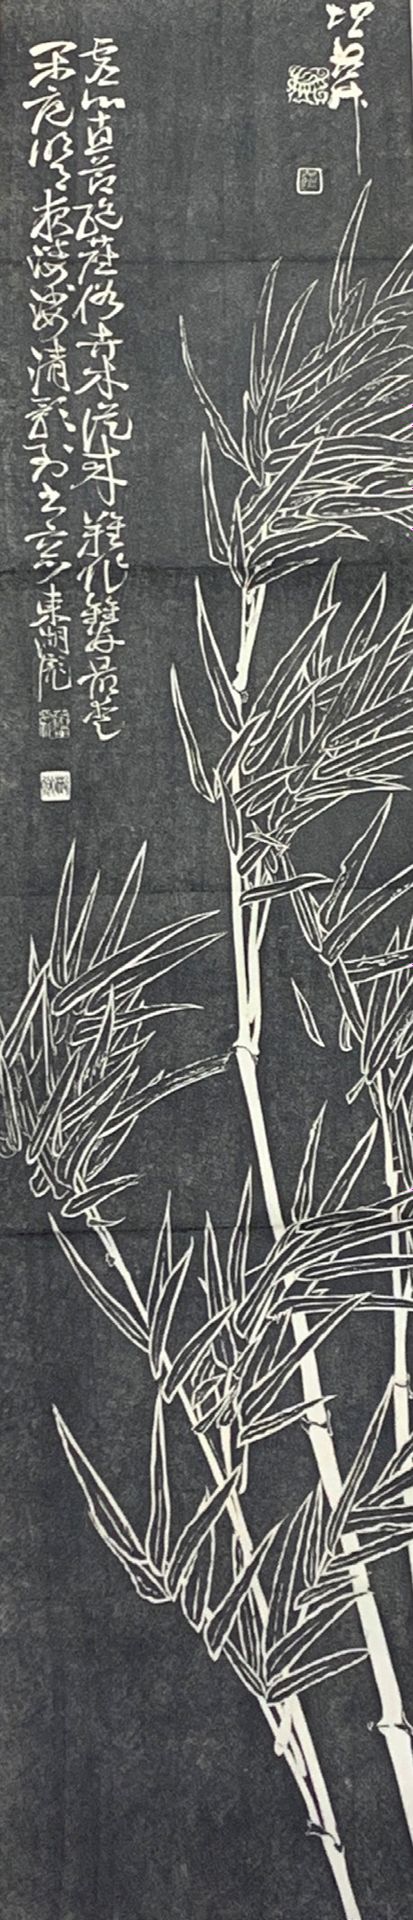 JAPON Impresión Kakemono.
Impresión negra sobre papel que muestra tres bambúes c&hellip;